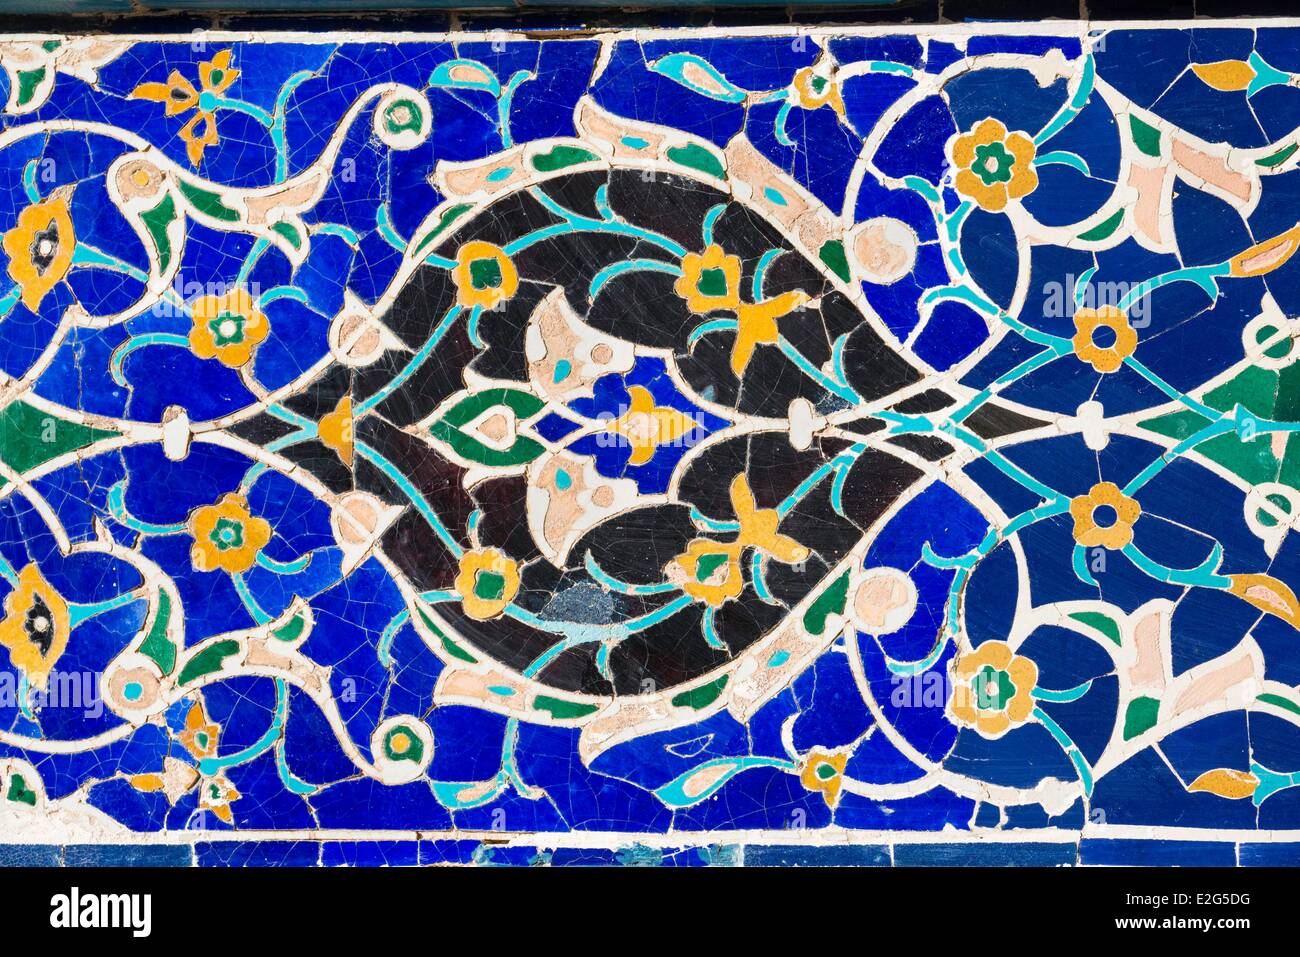 Uzbekistan Silk Road Samarcanda elencati come patrimonio mondiale dall' UNESCO Shah I Zinda necropoli dettaglio mosaico Foto Stock